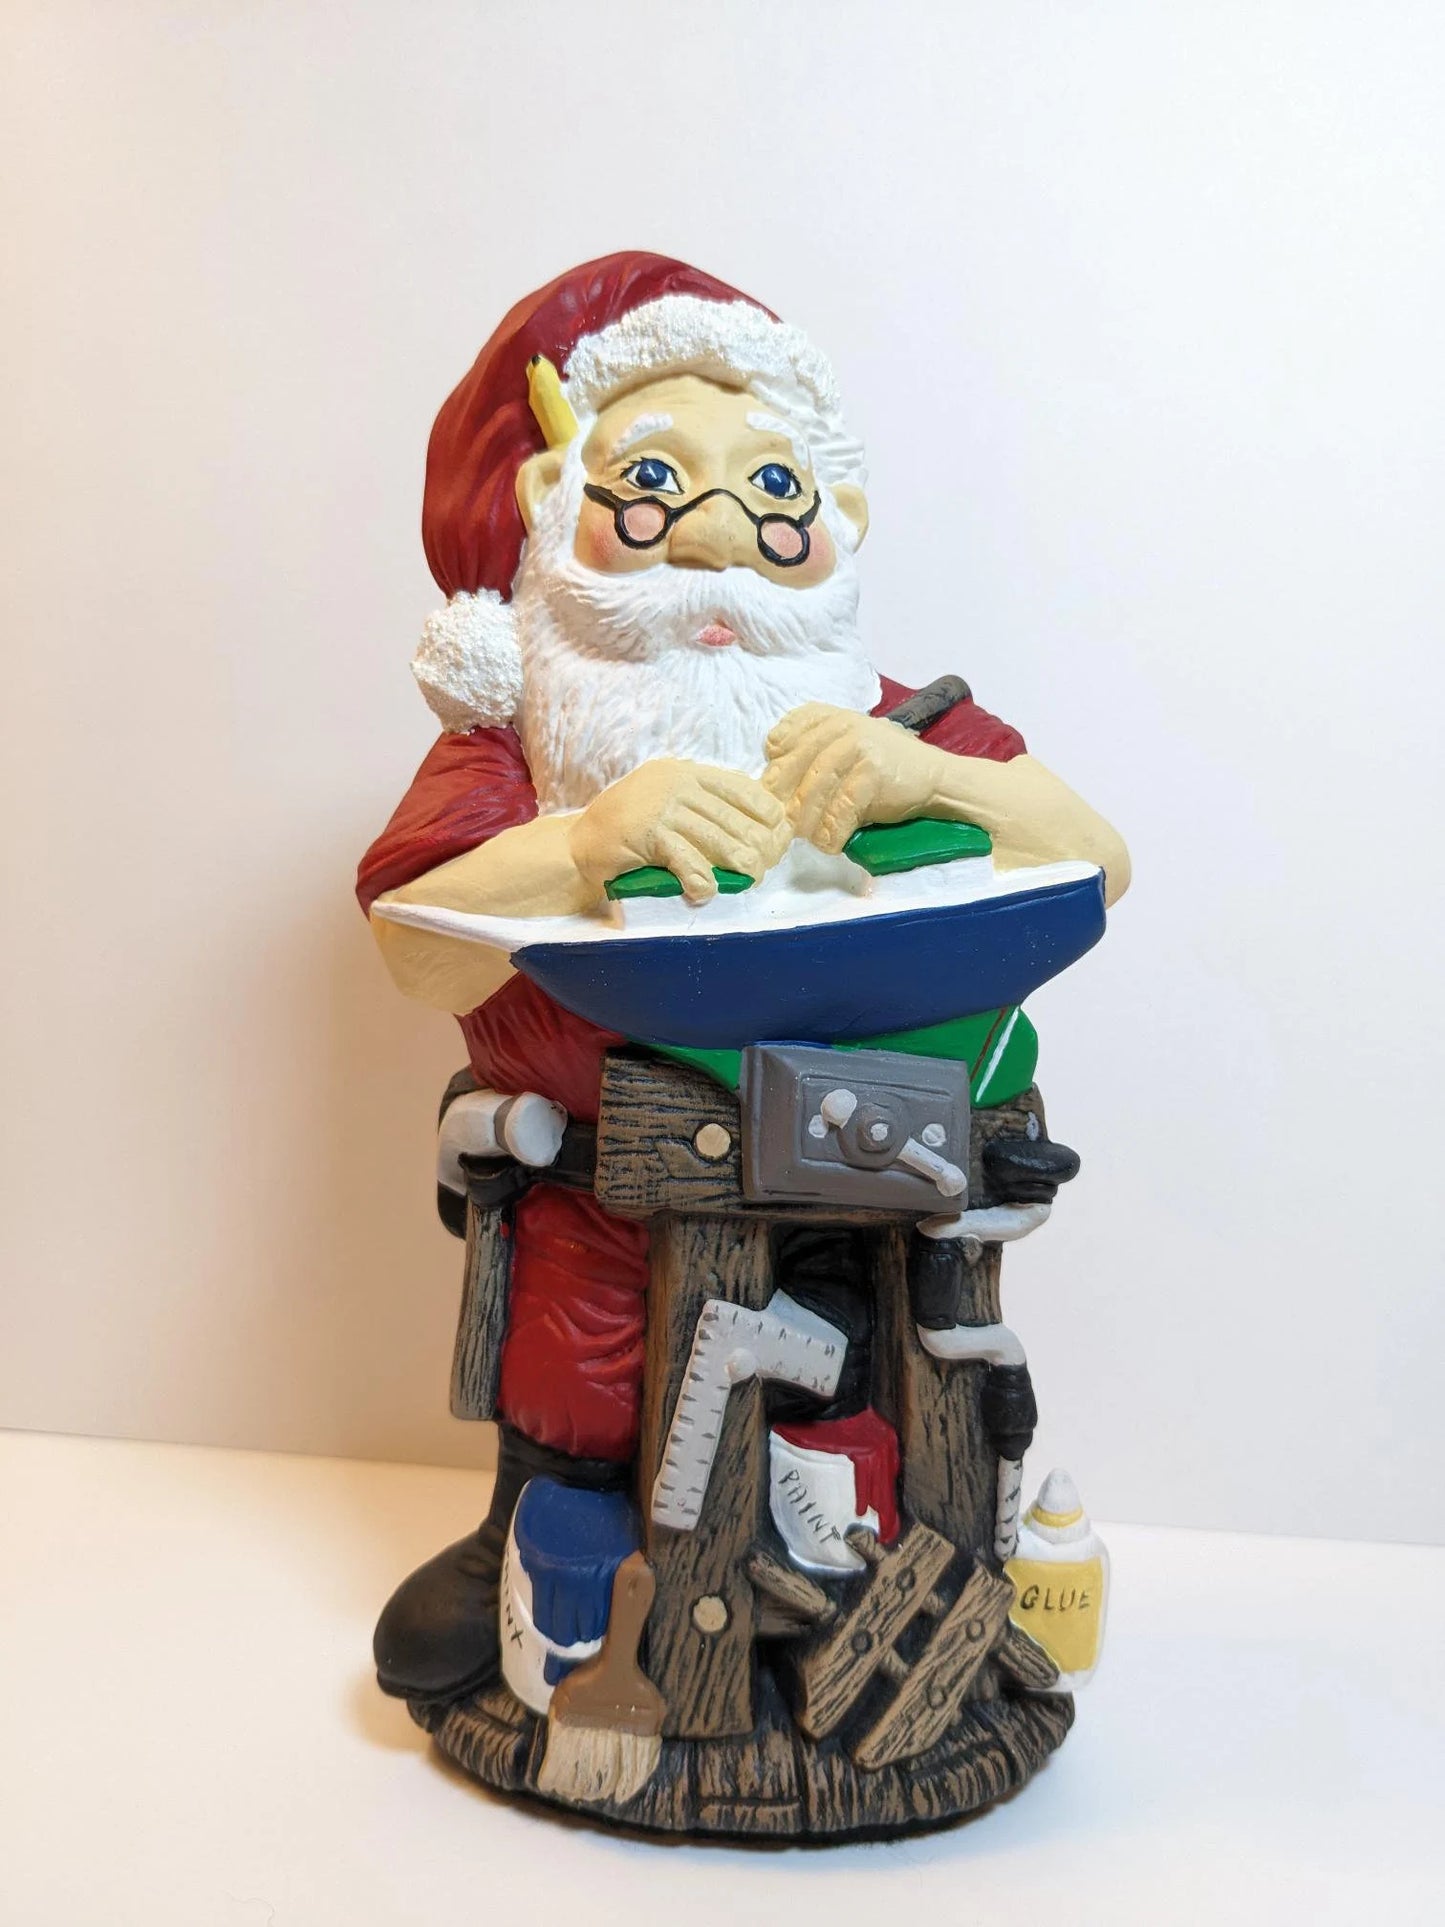 Woodworking Santa Claus Figurine